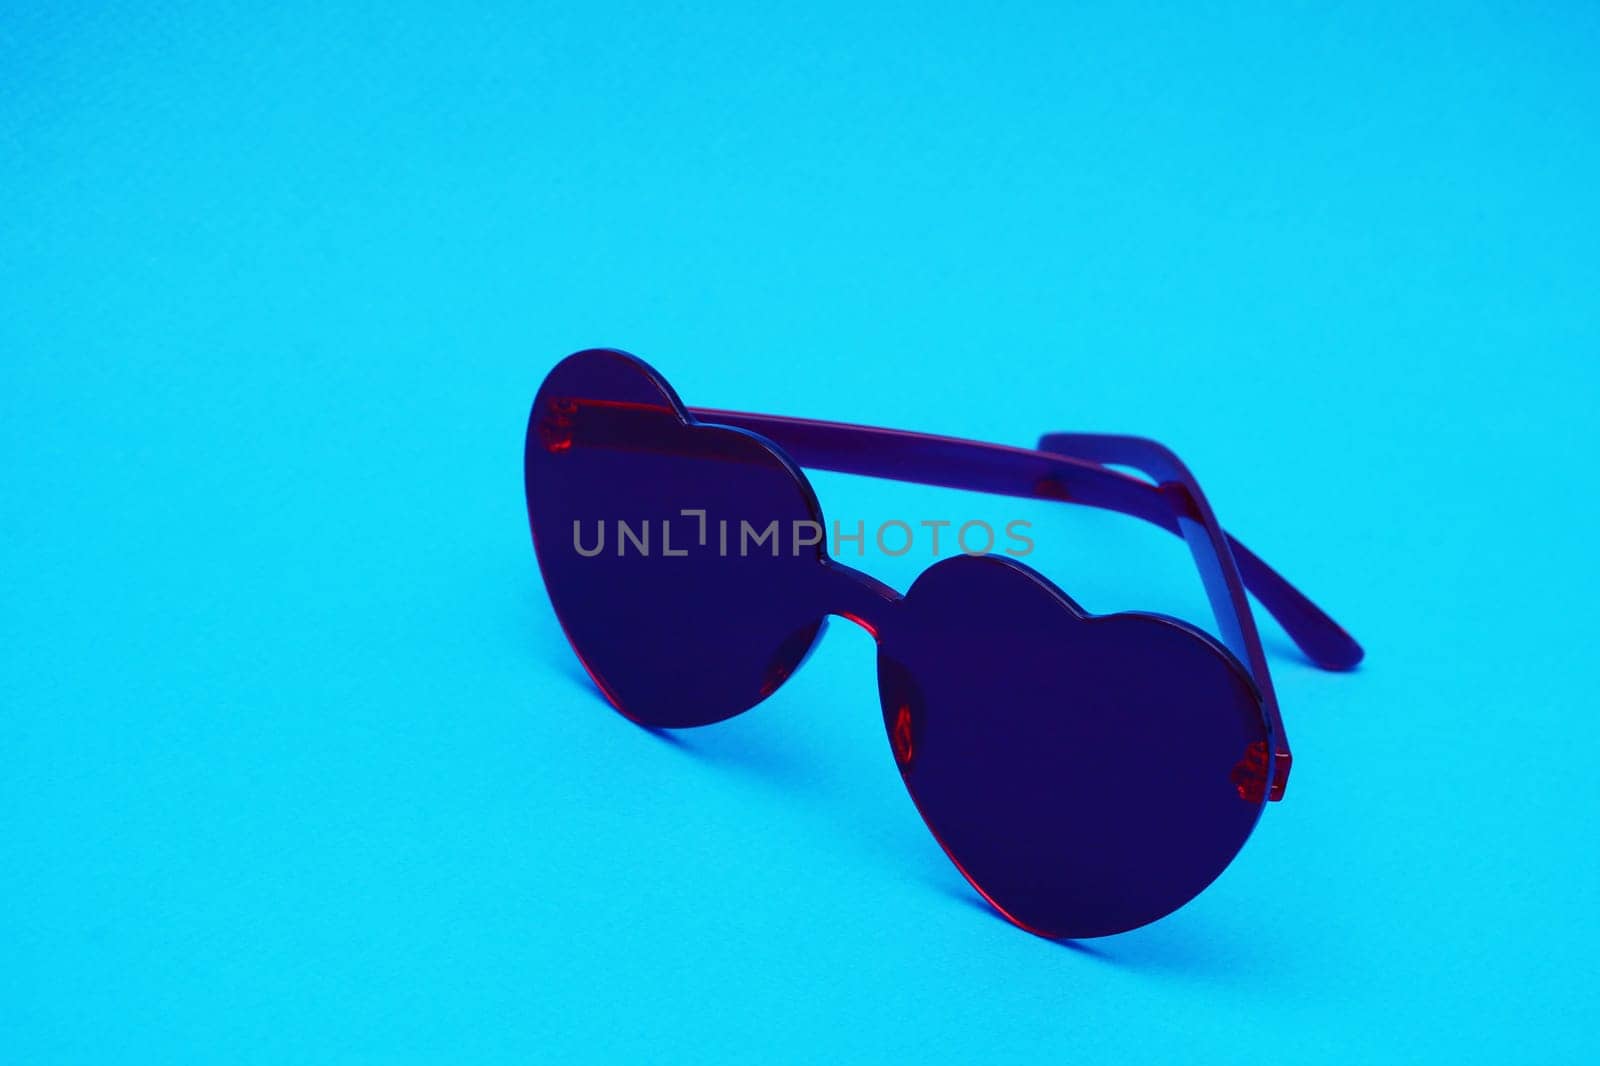 Fashionable dark blue glasses on a light blue background. by gelog67